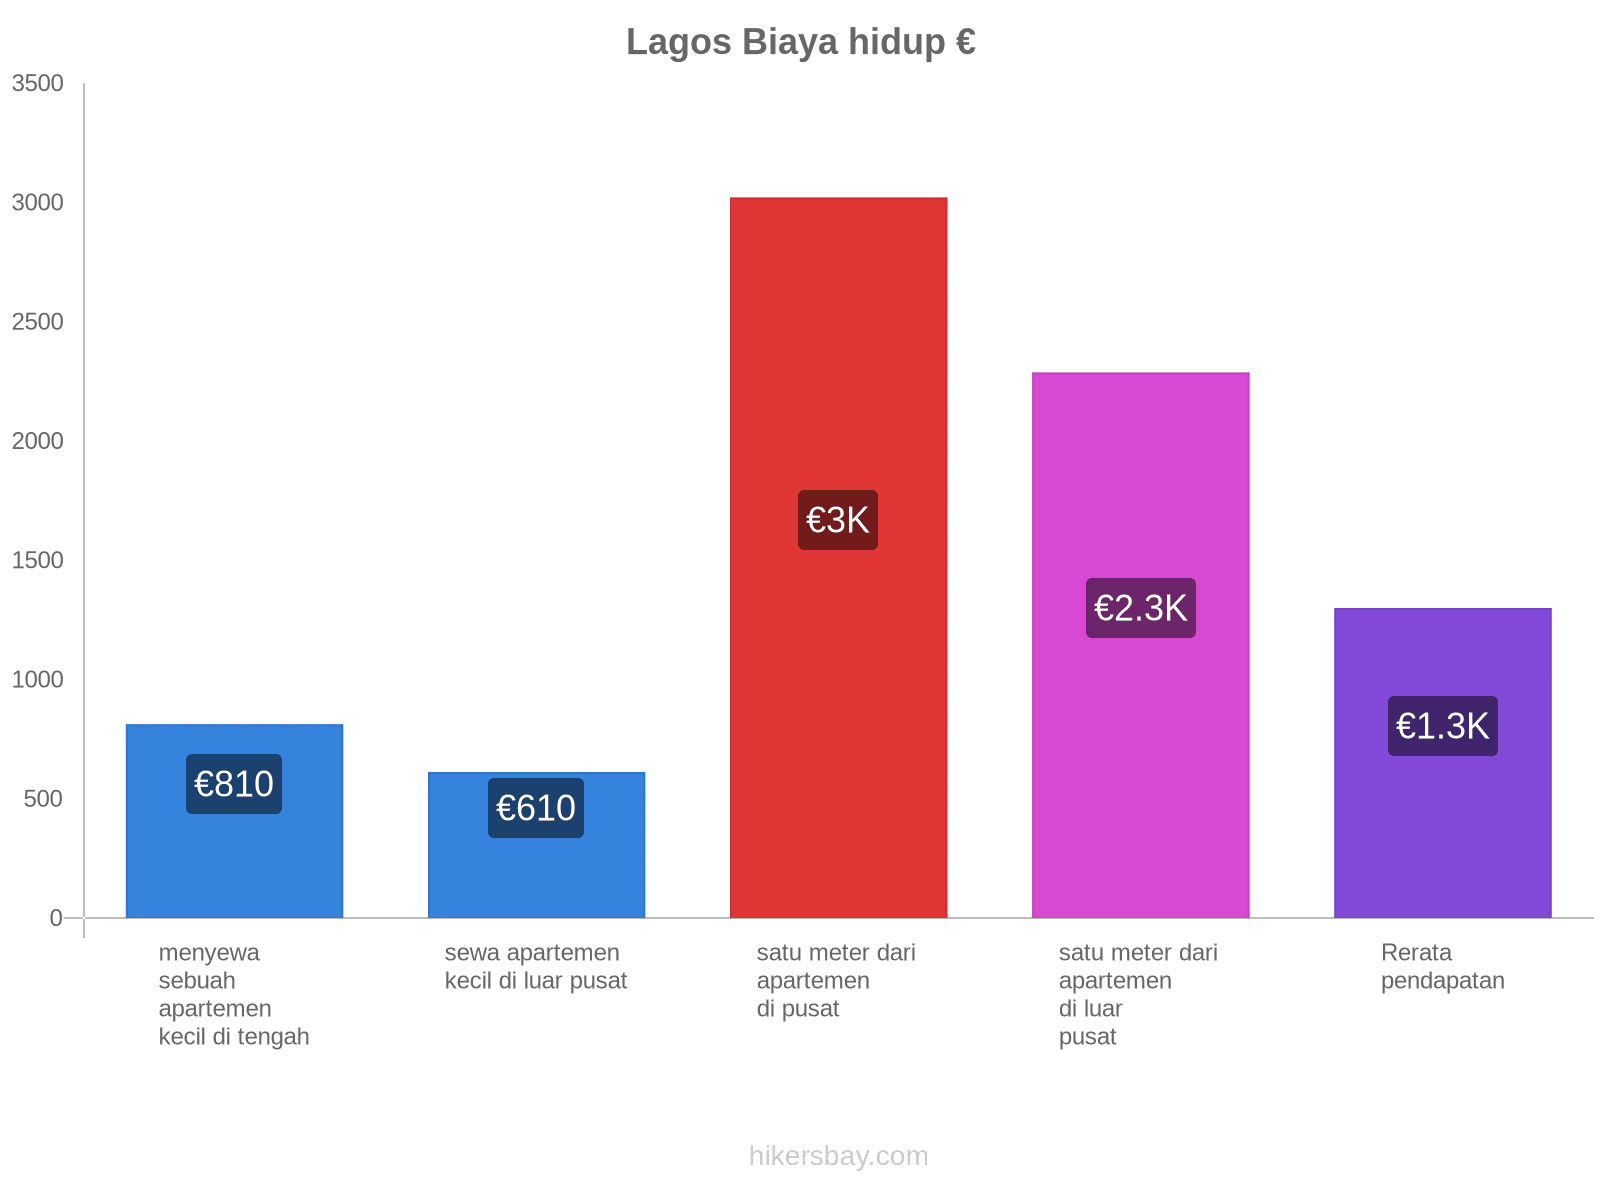 Lagos biaya hidup hikersbay.com